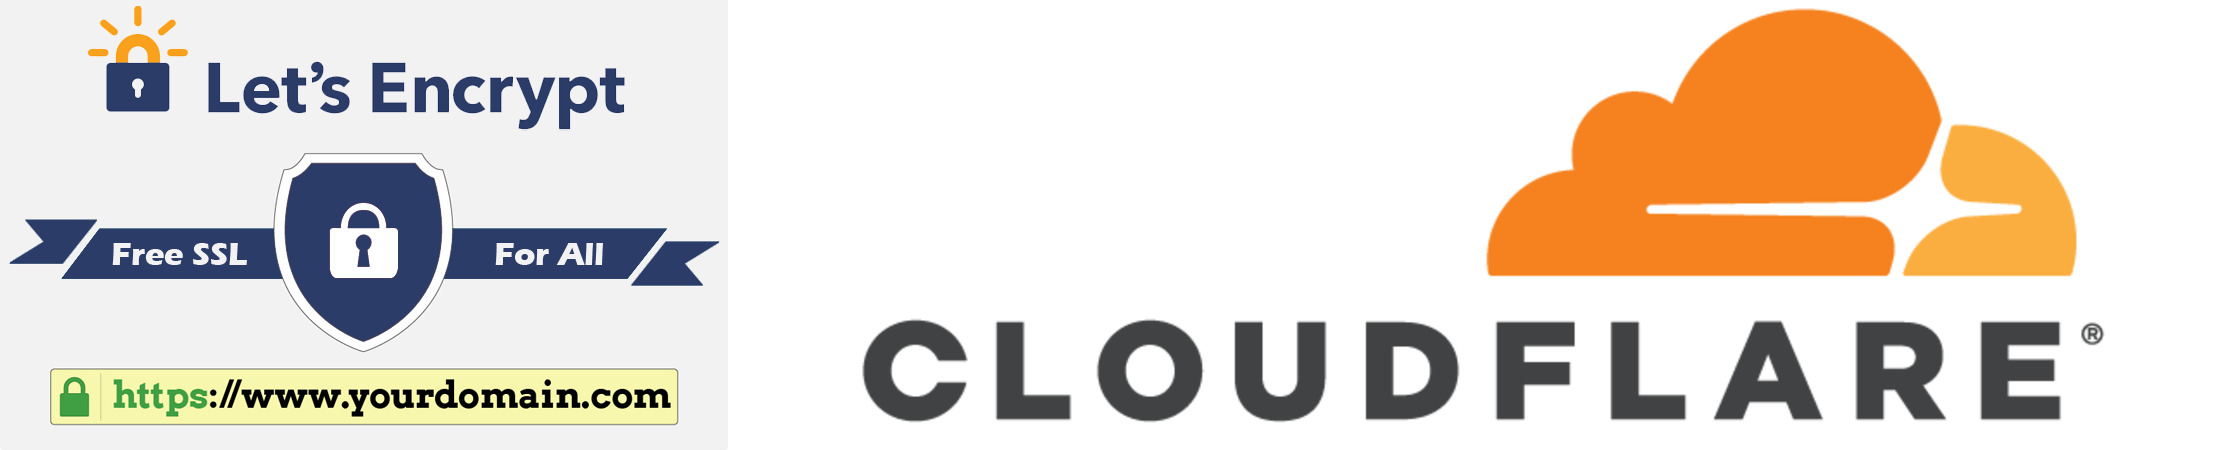 Lets Encrypt - Cloudflare